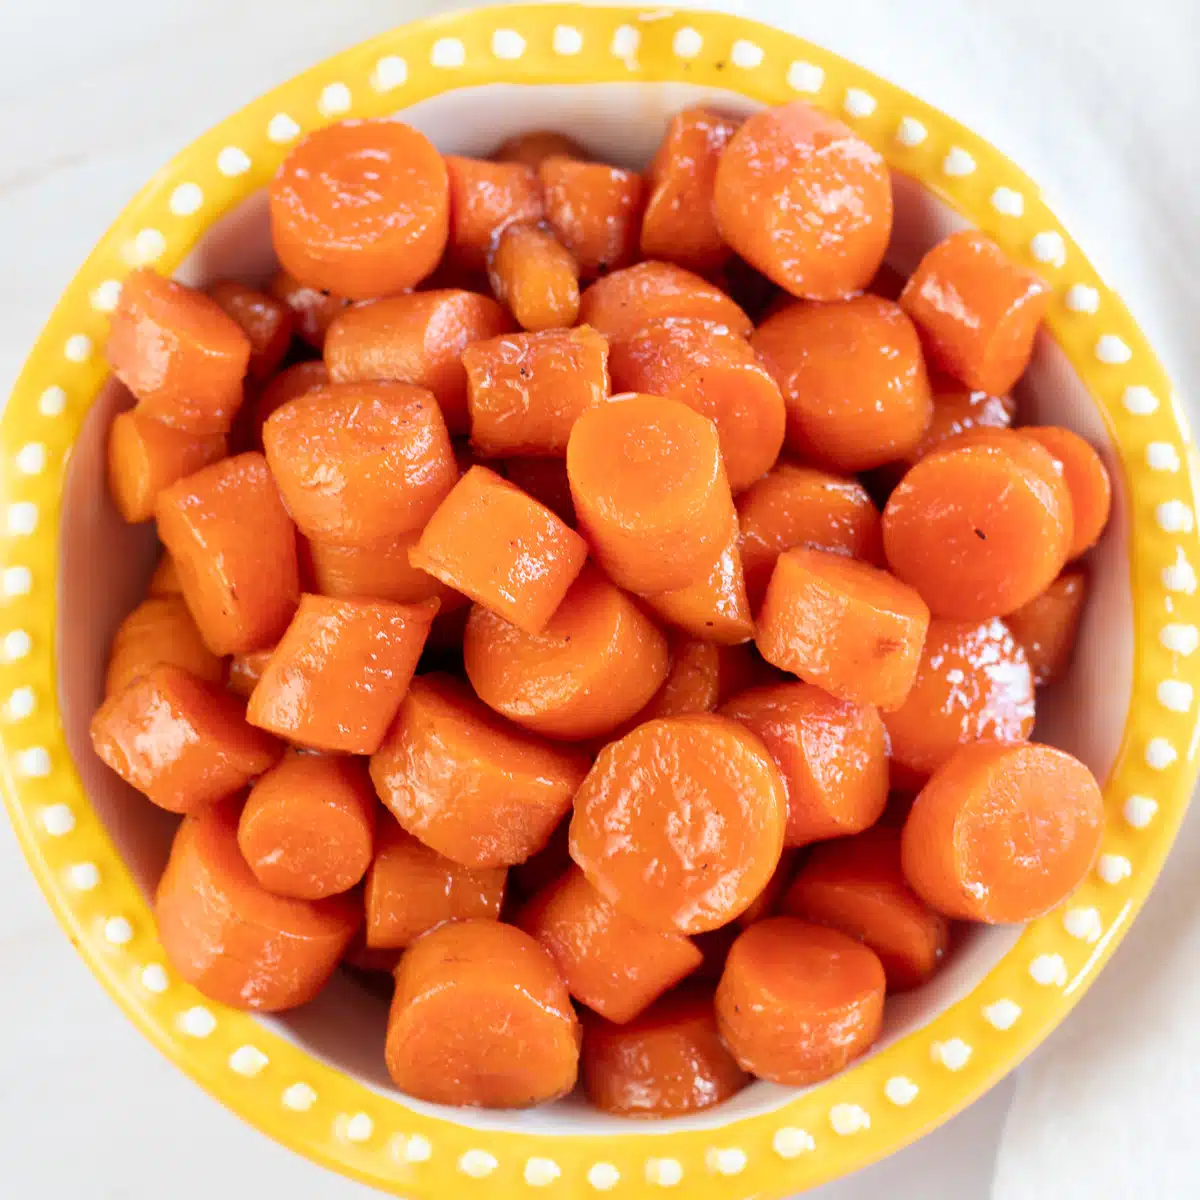 Imagen cuadrada de un plato de zanahorias confitadas.